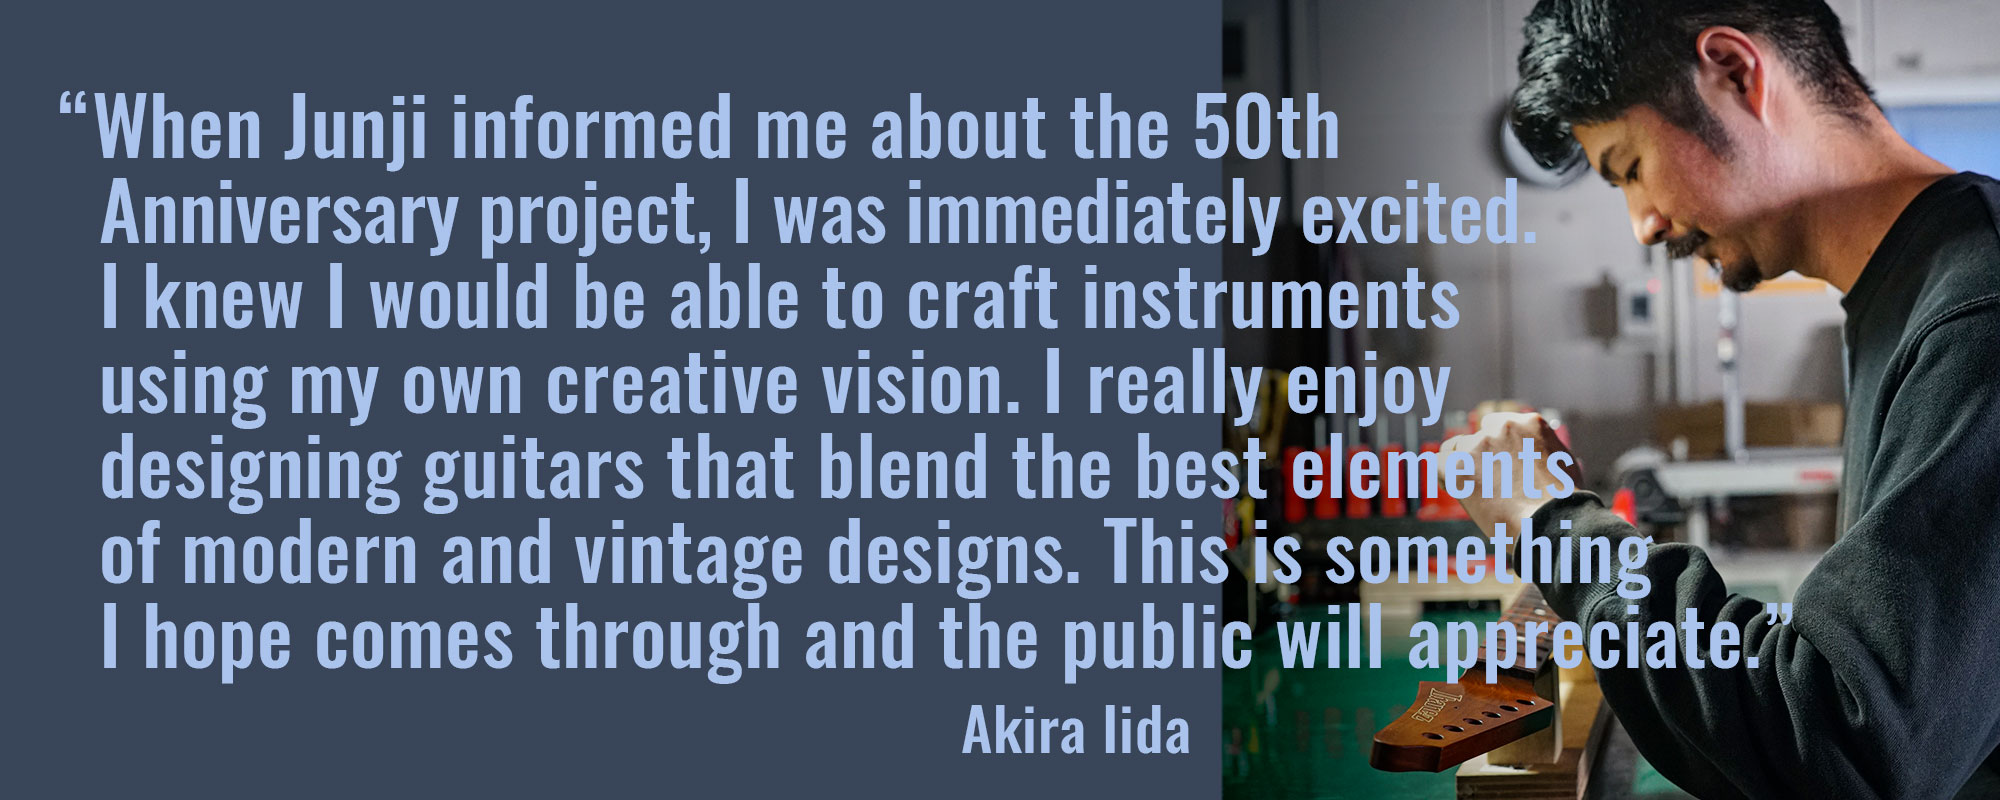 Akira Iida